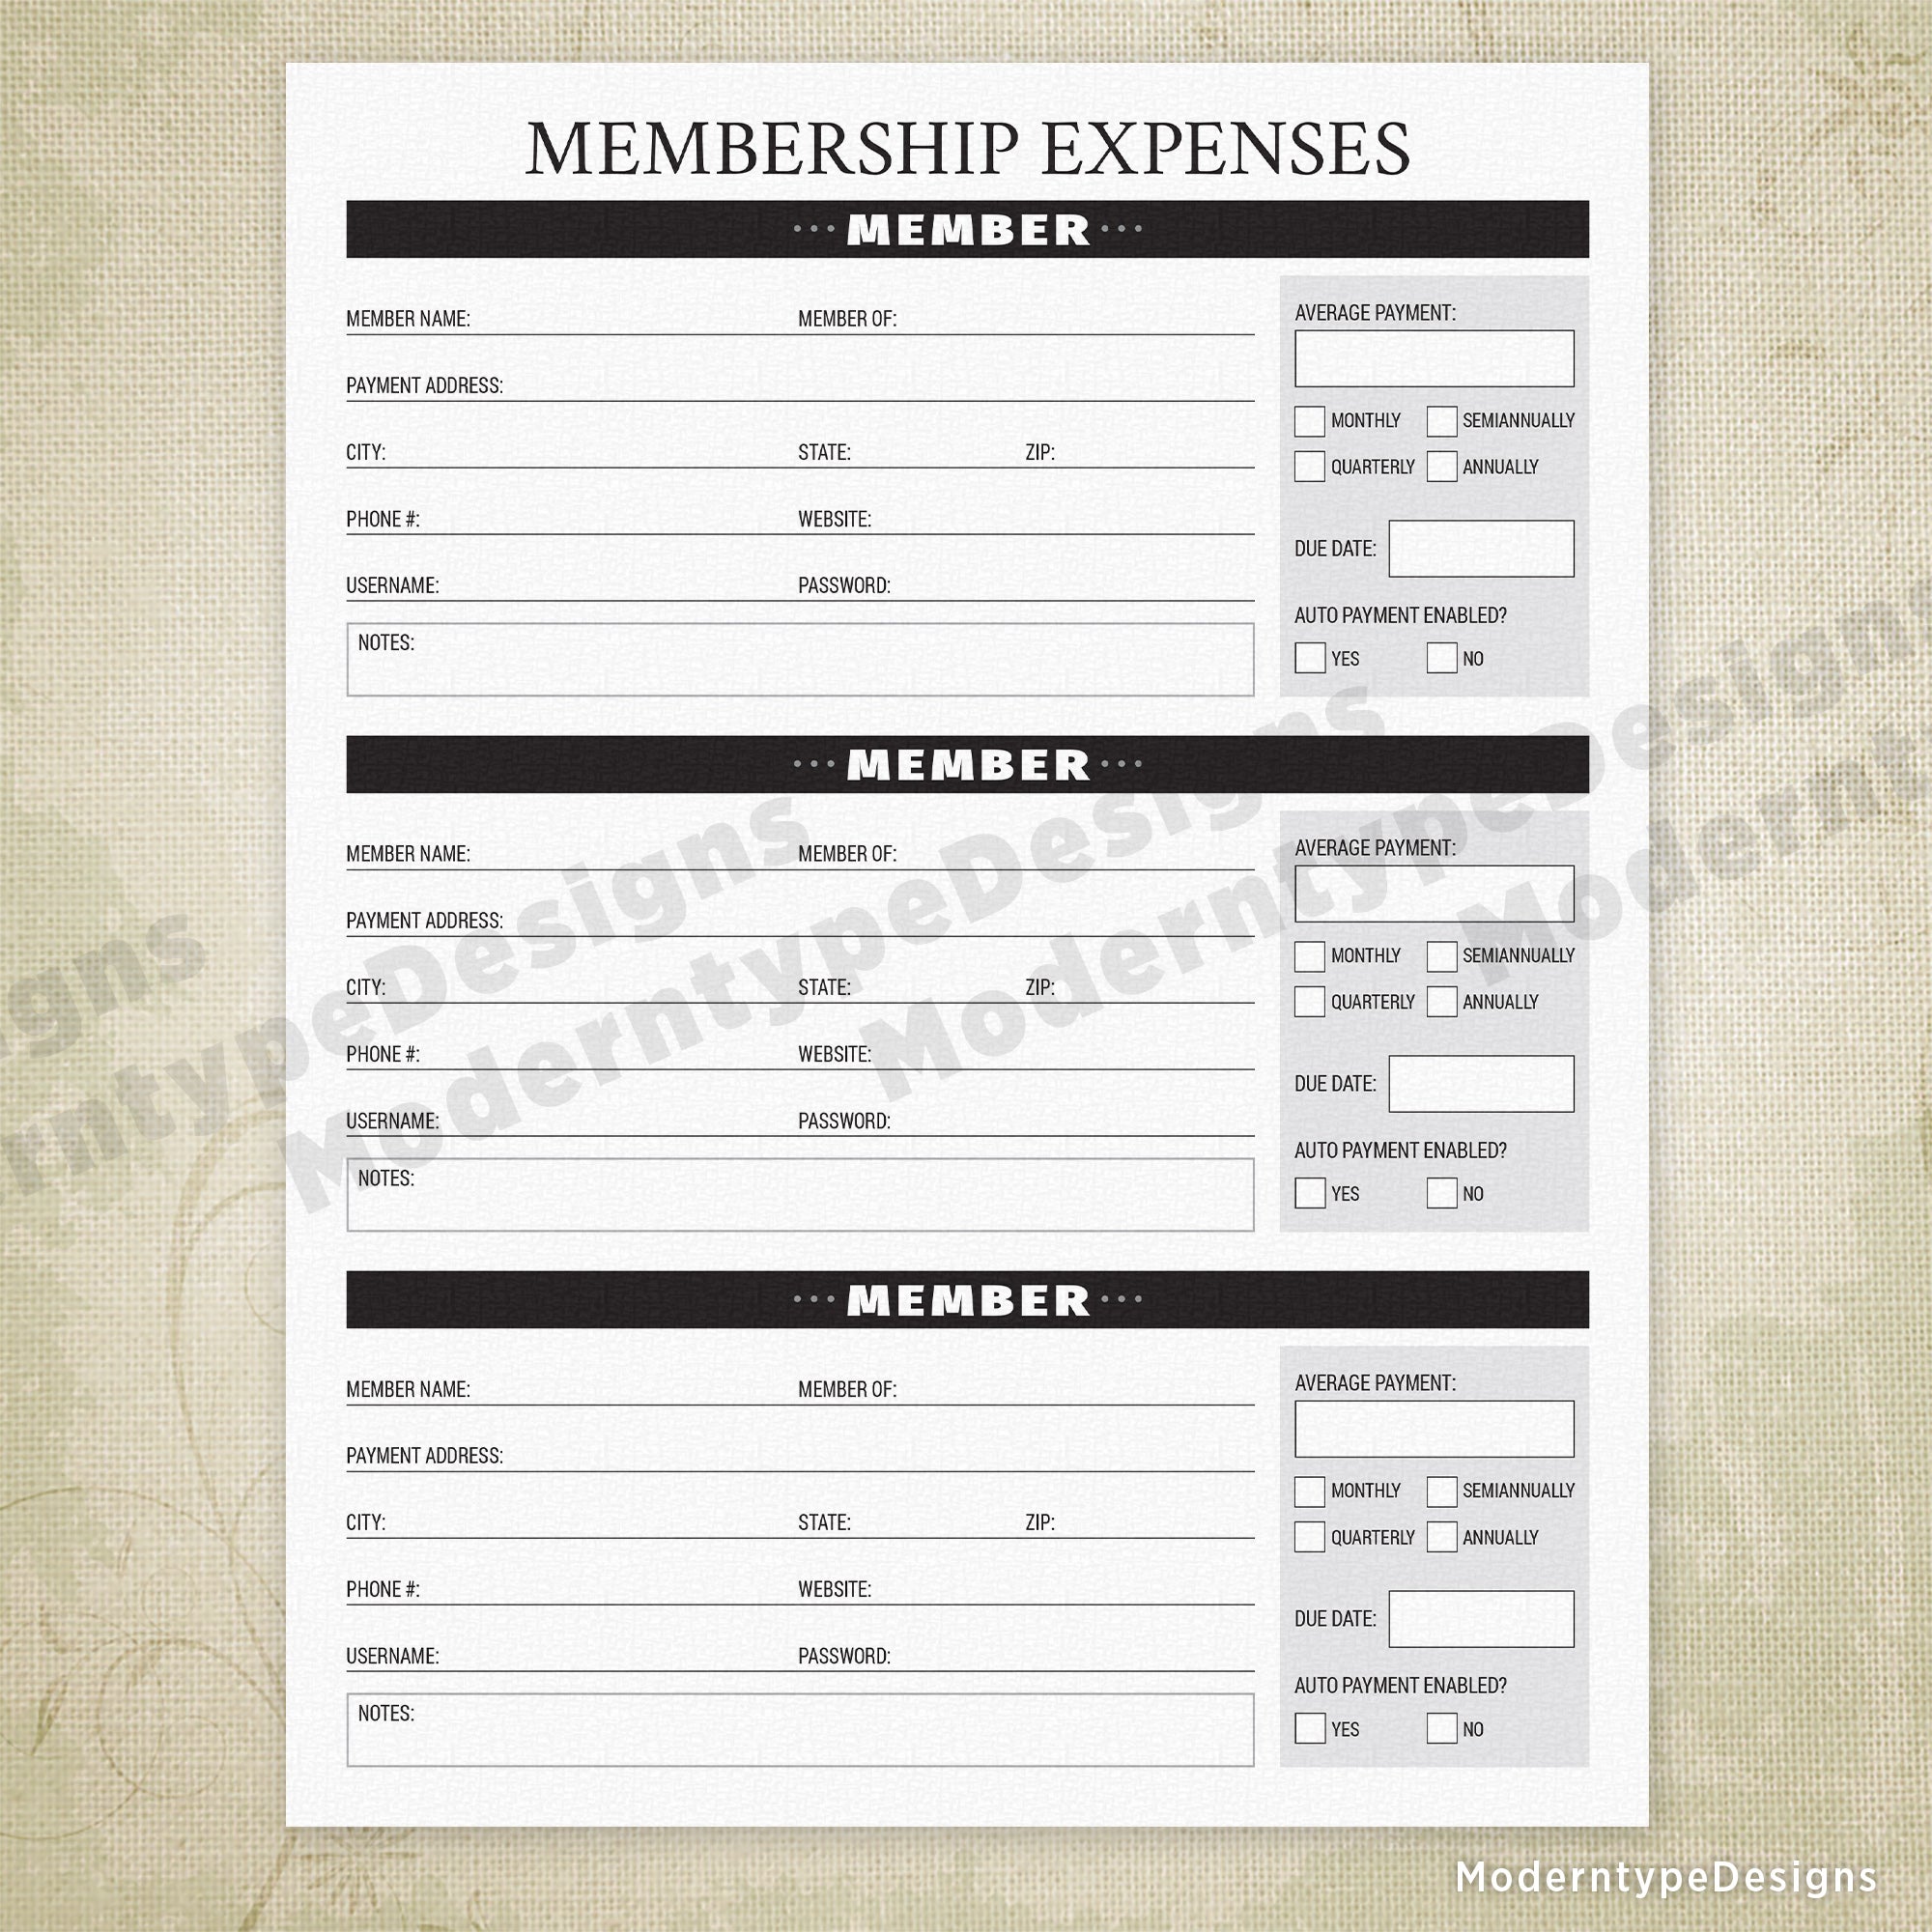 Membership Expenses Printable - End of Life